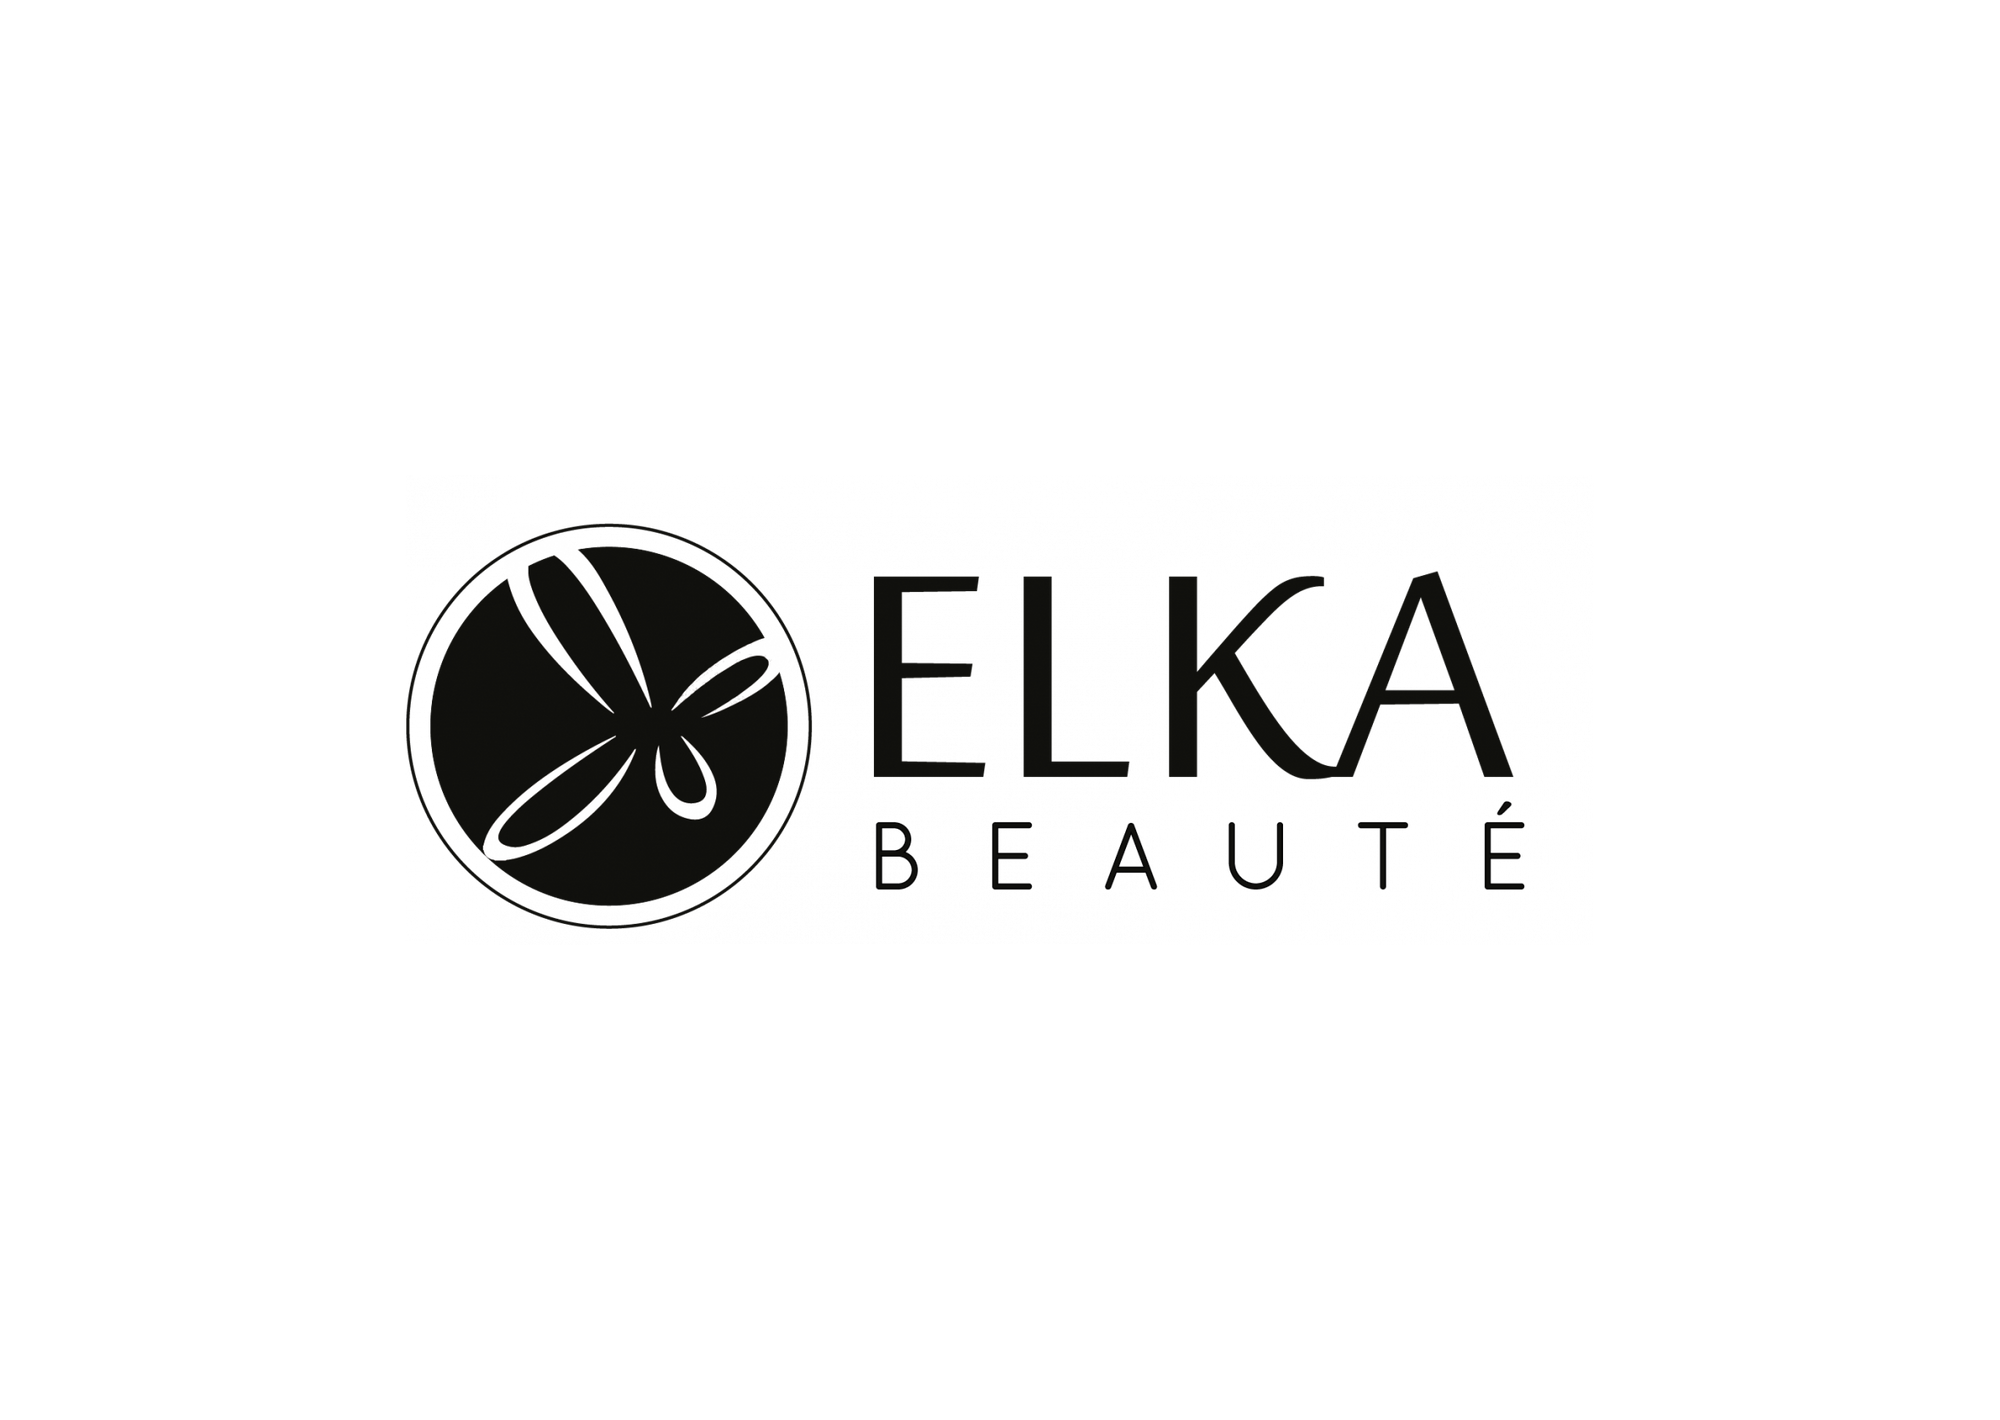 Your One-Stop Barber & Beauty Supplier - Elka Beauté